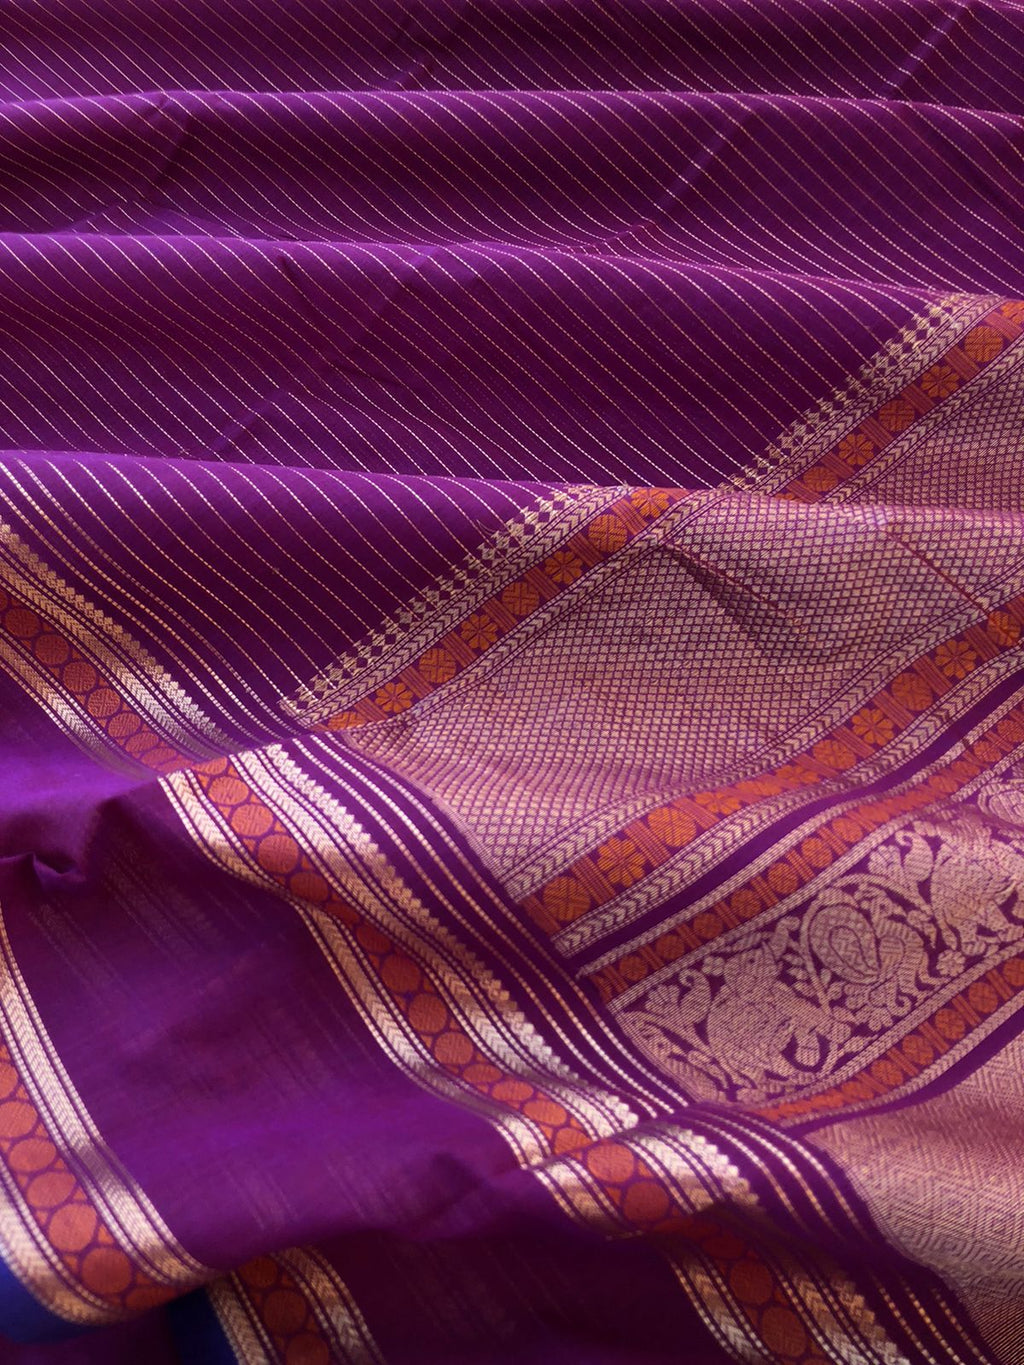 Mangalavastaram - amazing deep purple Vairaoosi with traditional